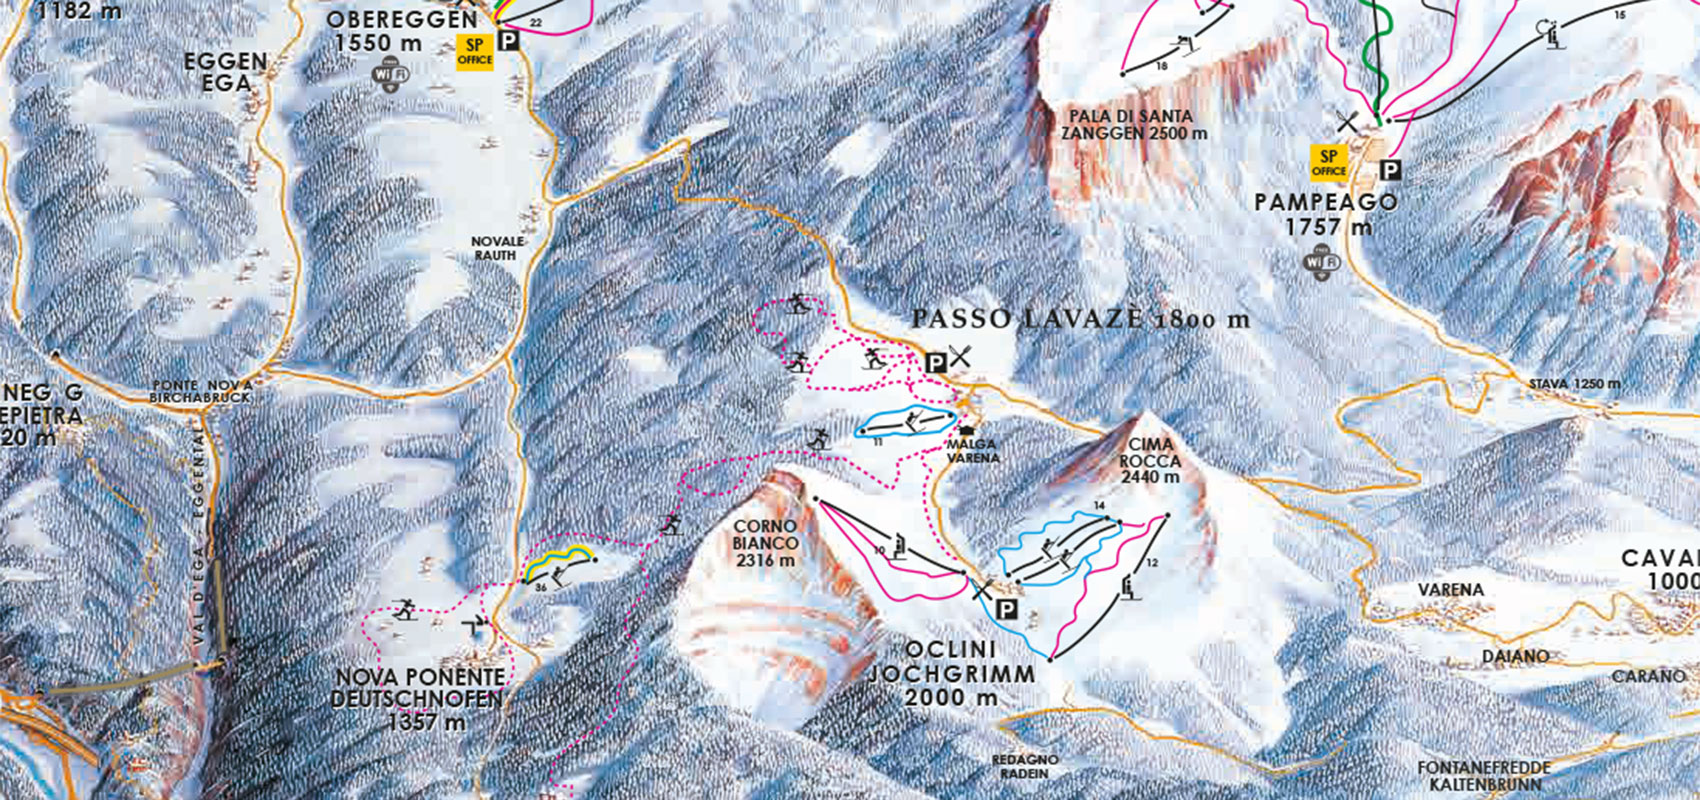 Ski map Lavaze Jochgrimm